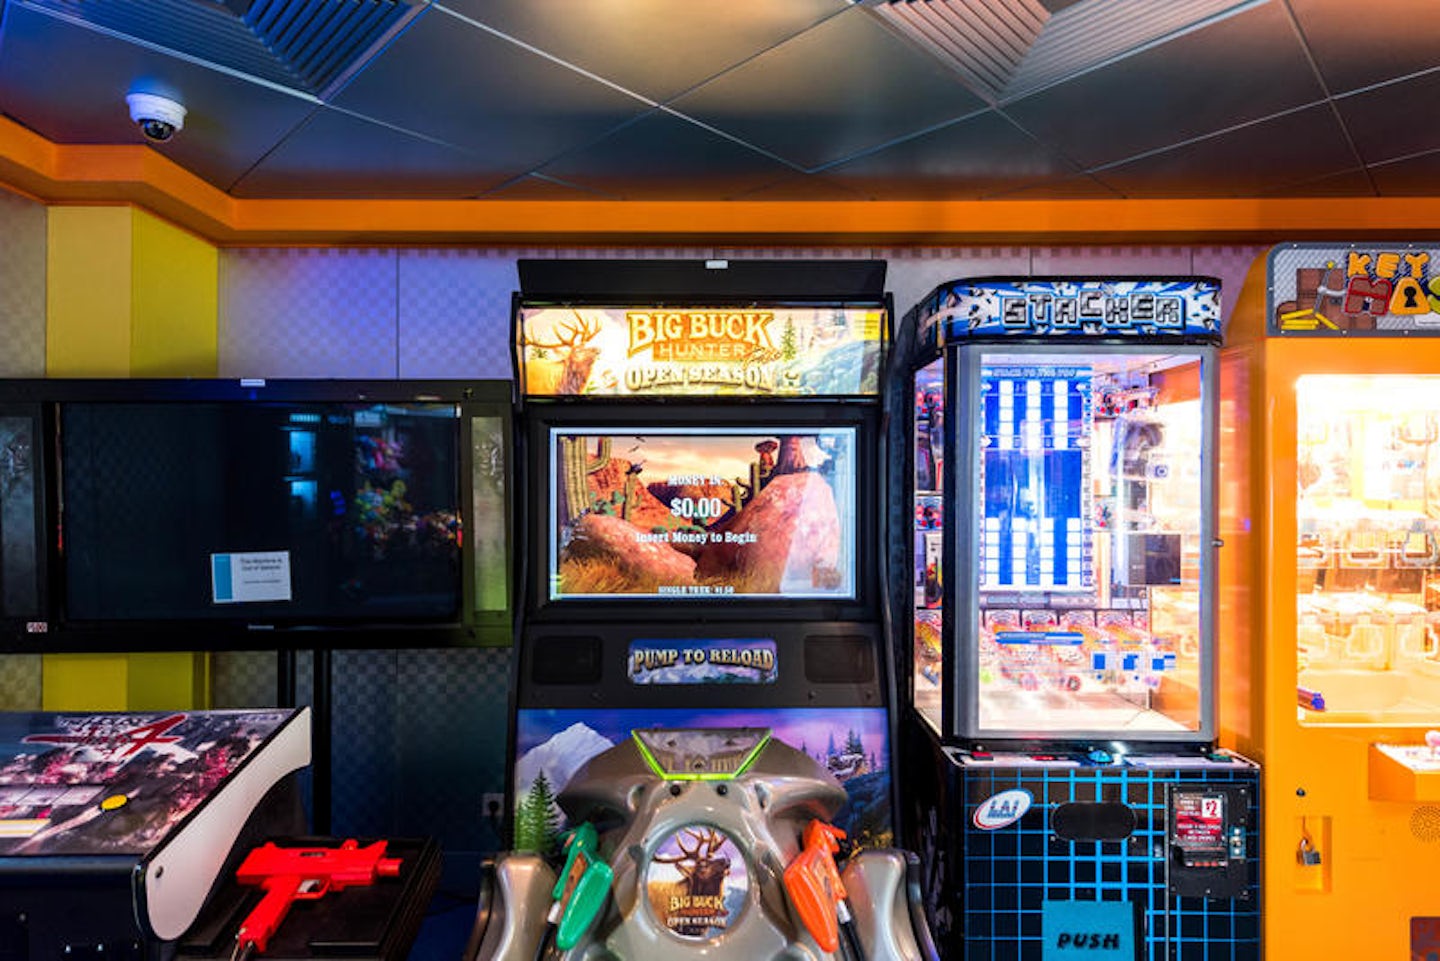 Video Arcade on Norwegian Pearl